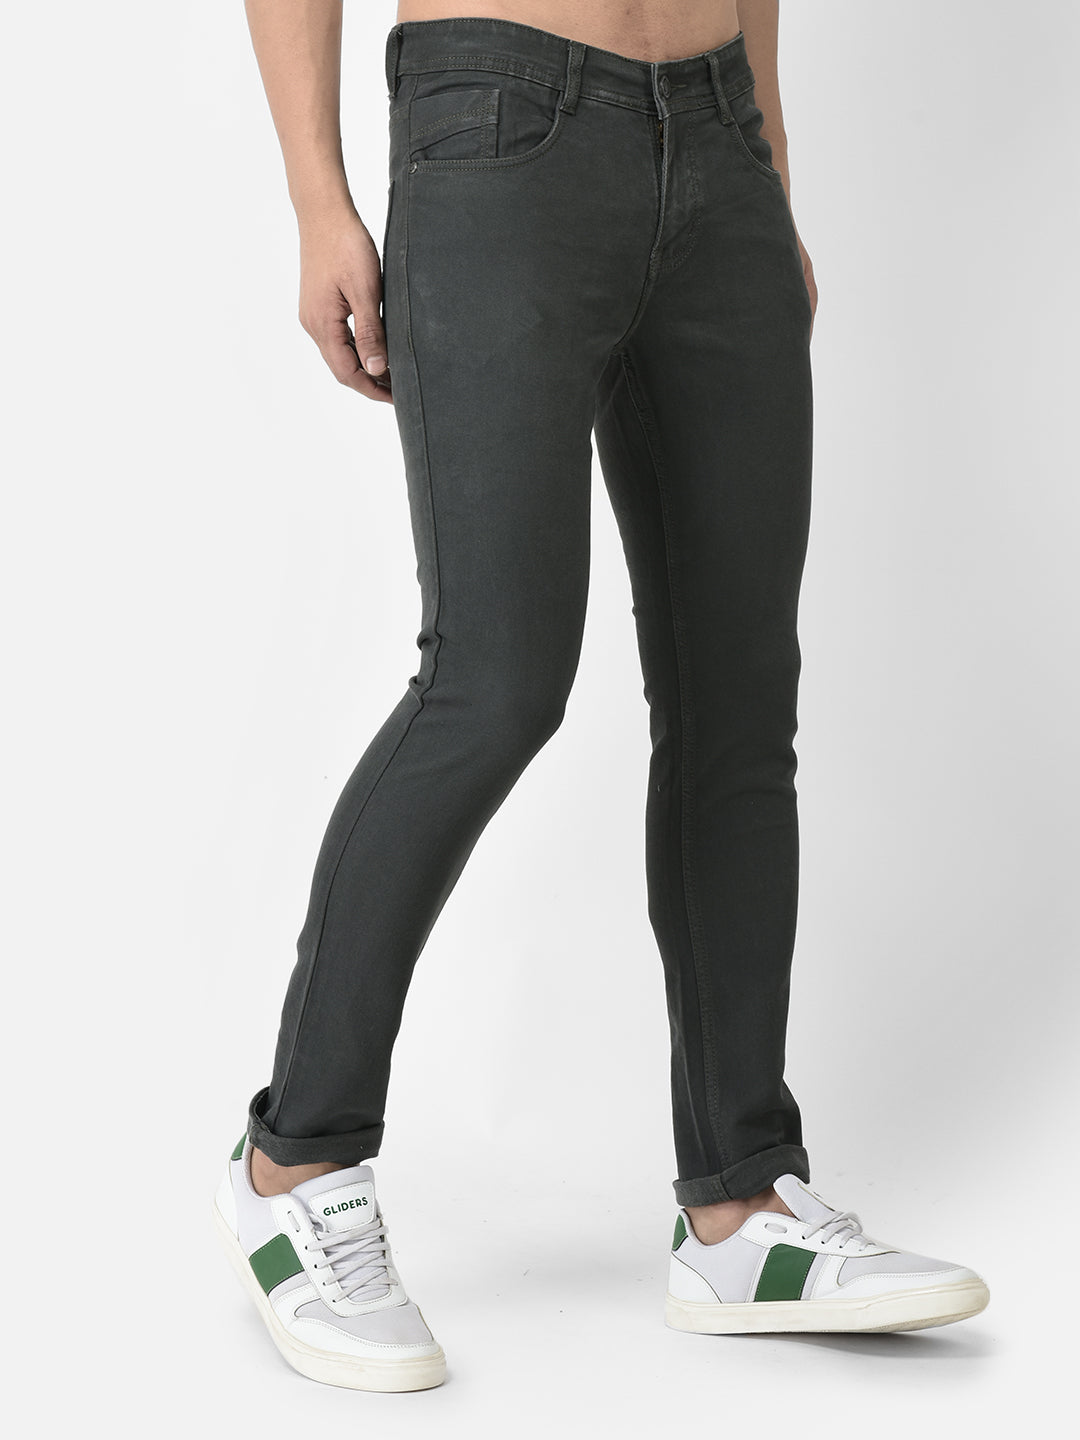 Cobb Dark Olive Ultra Fit Jeans